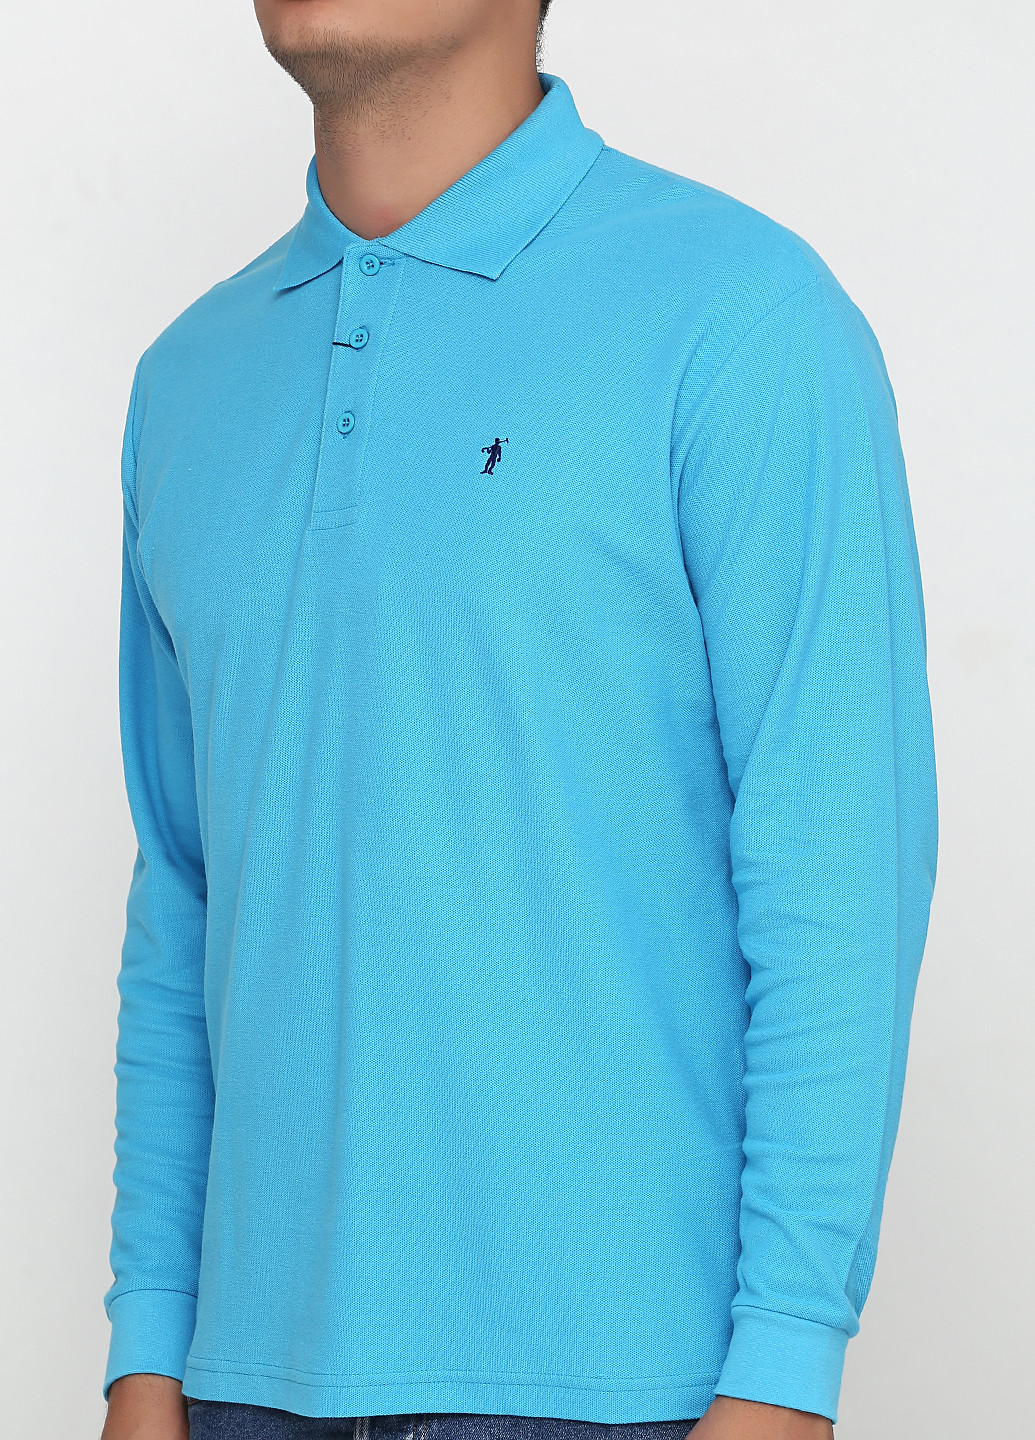 Голубой футболка-поло для мужчин Polo Club с логотипом